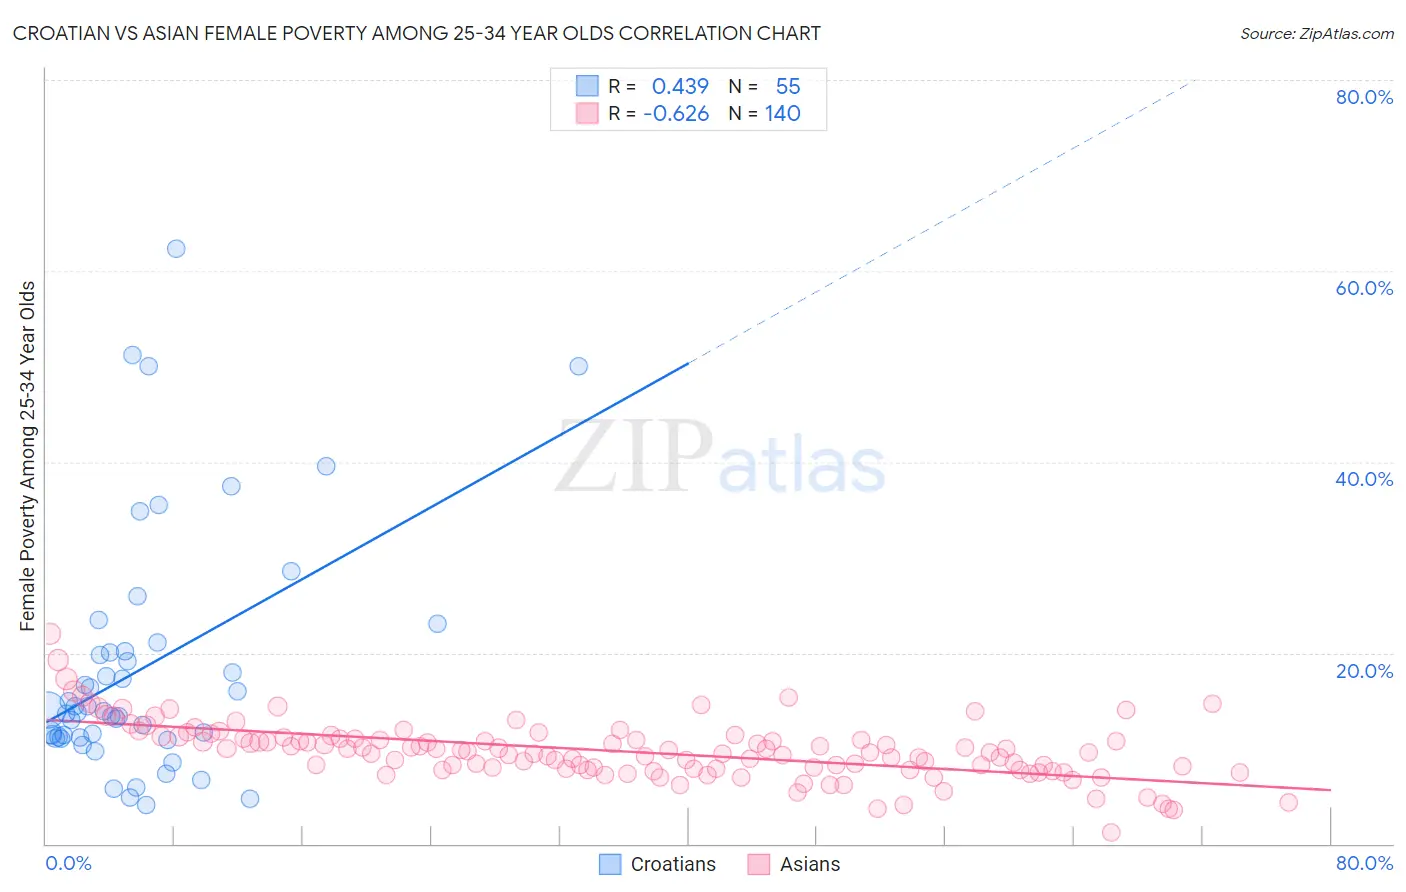 Croatian vs Asian Female Poverty Among 25-34 Year Olds